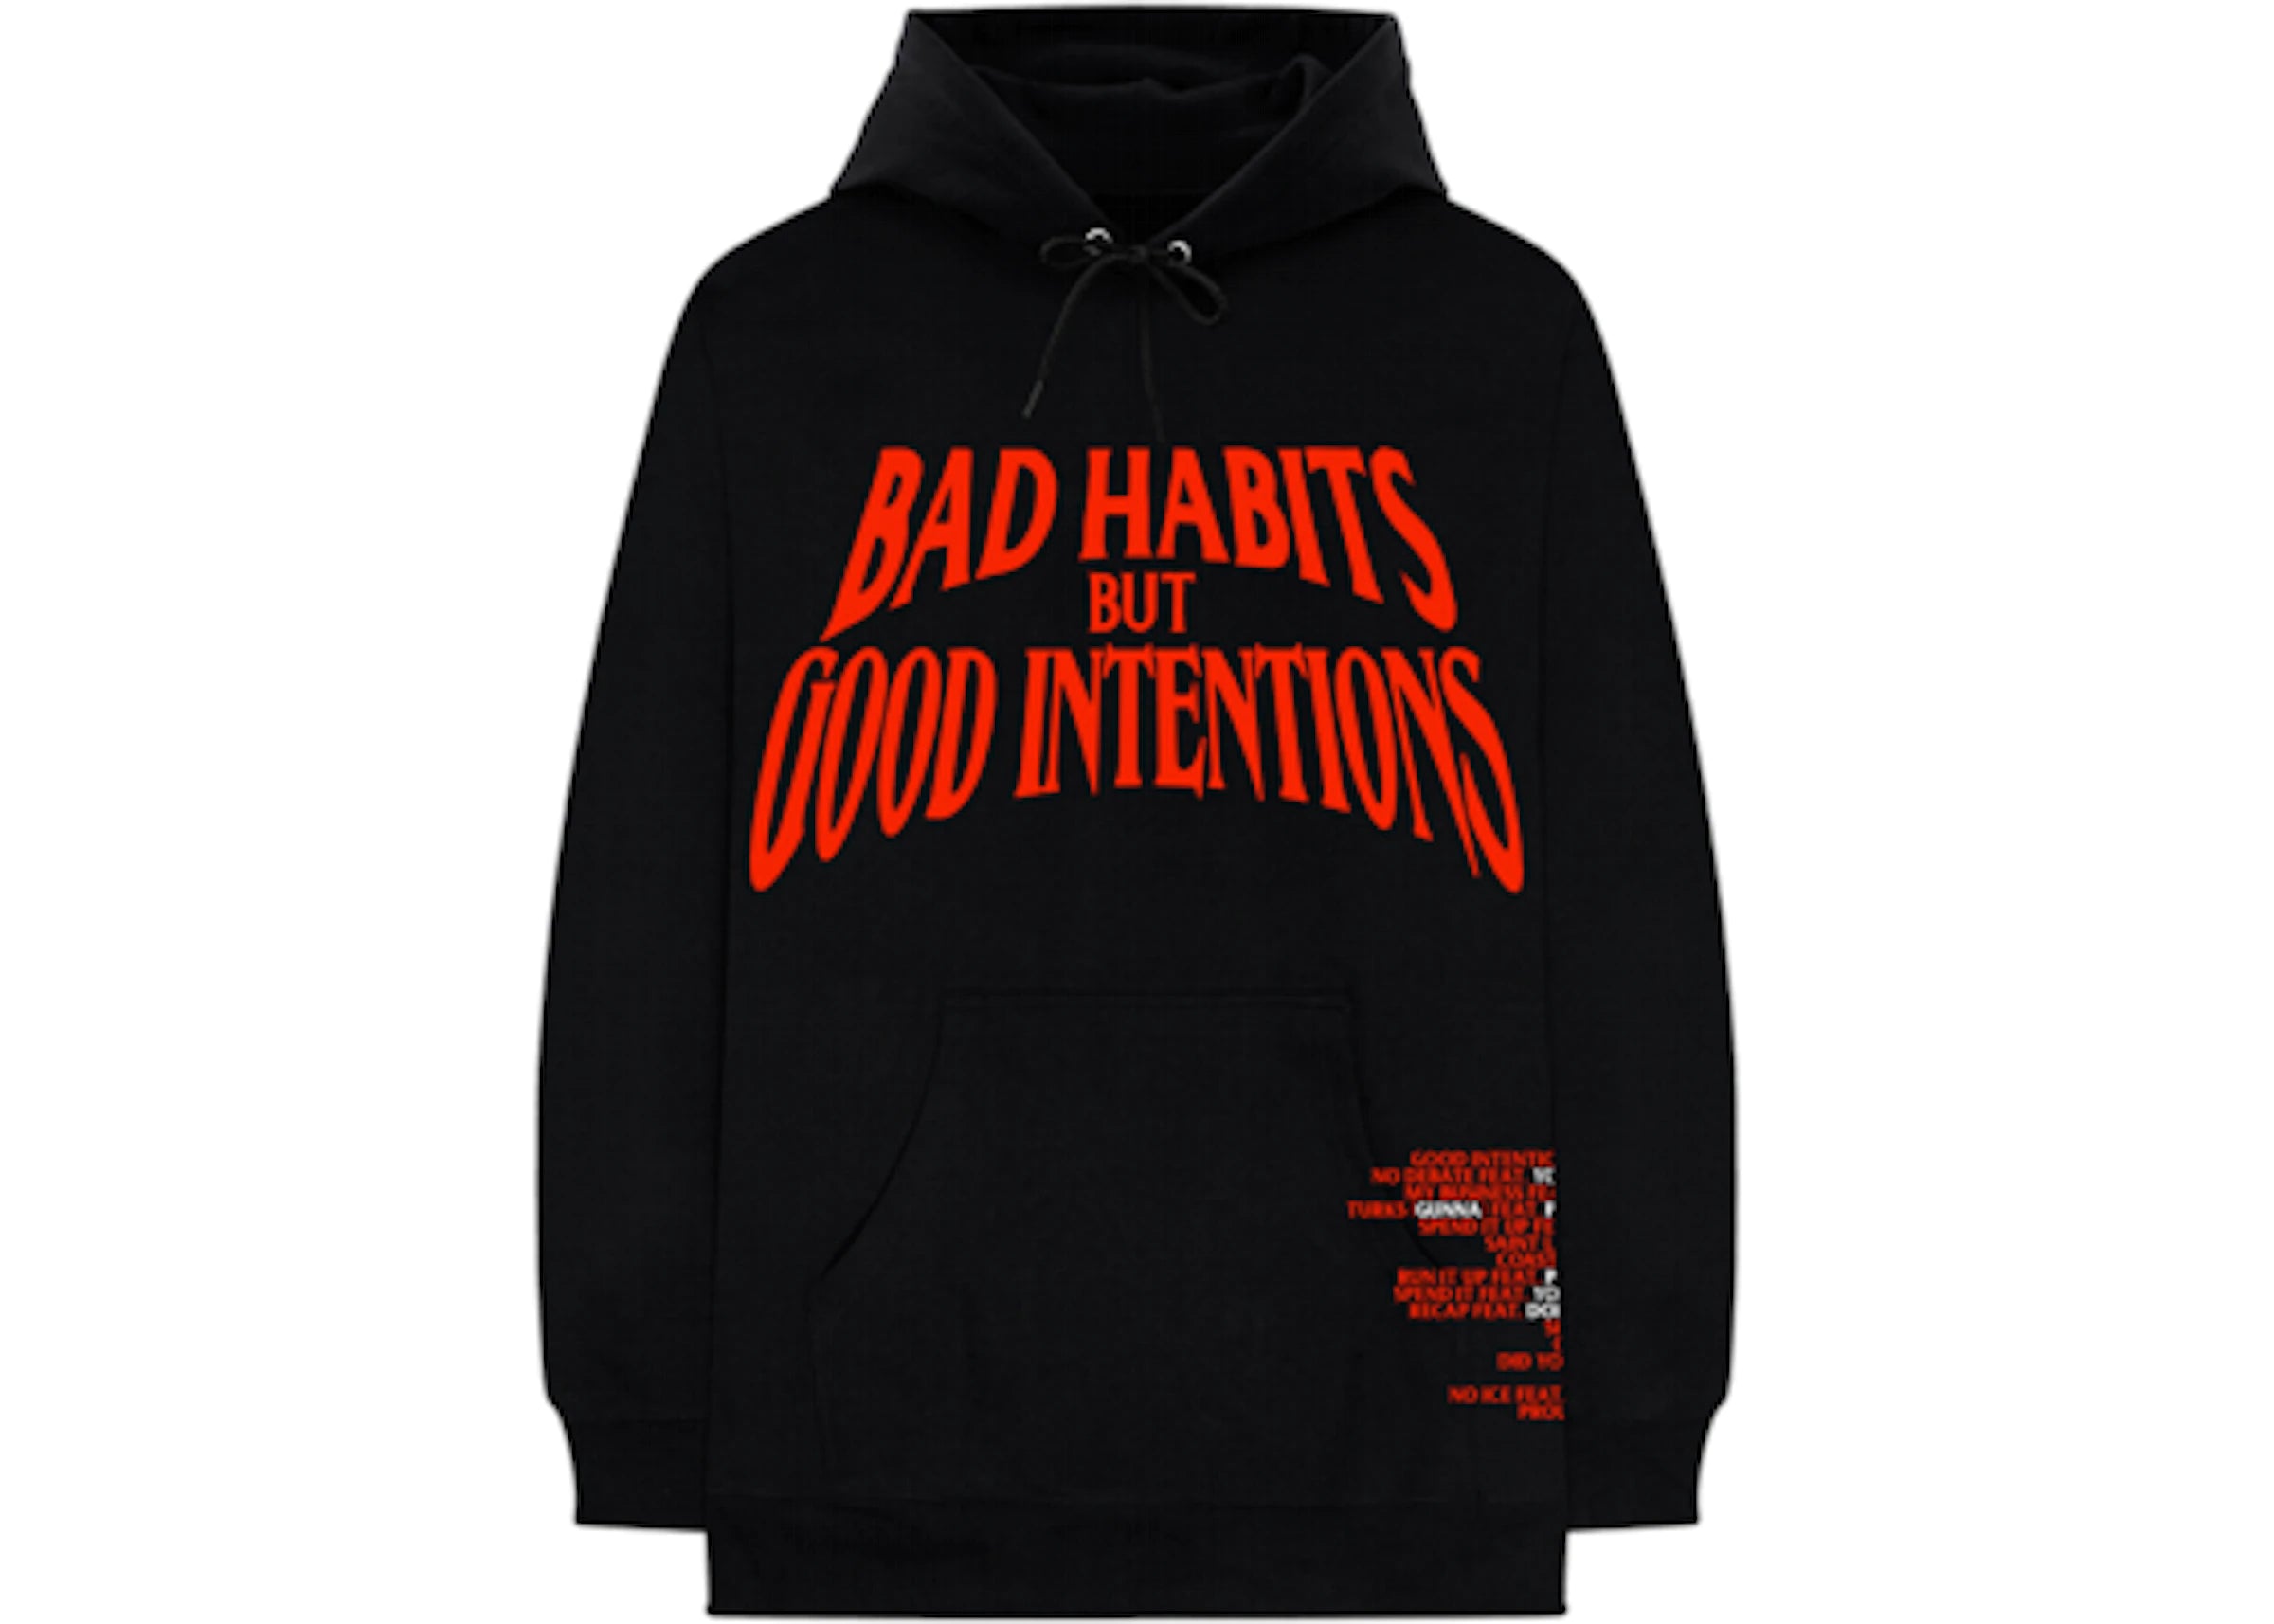 VLone x Nav "Bad Habits but Good Intentions" Black Hoodie